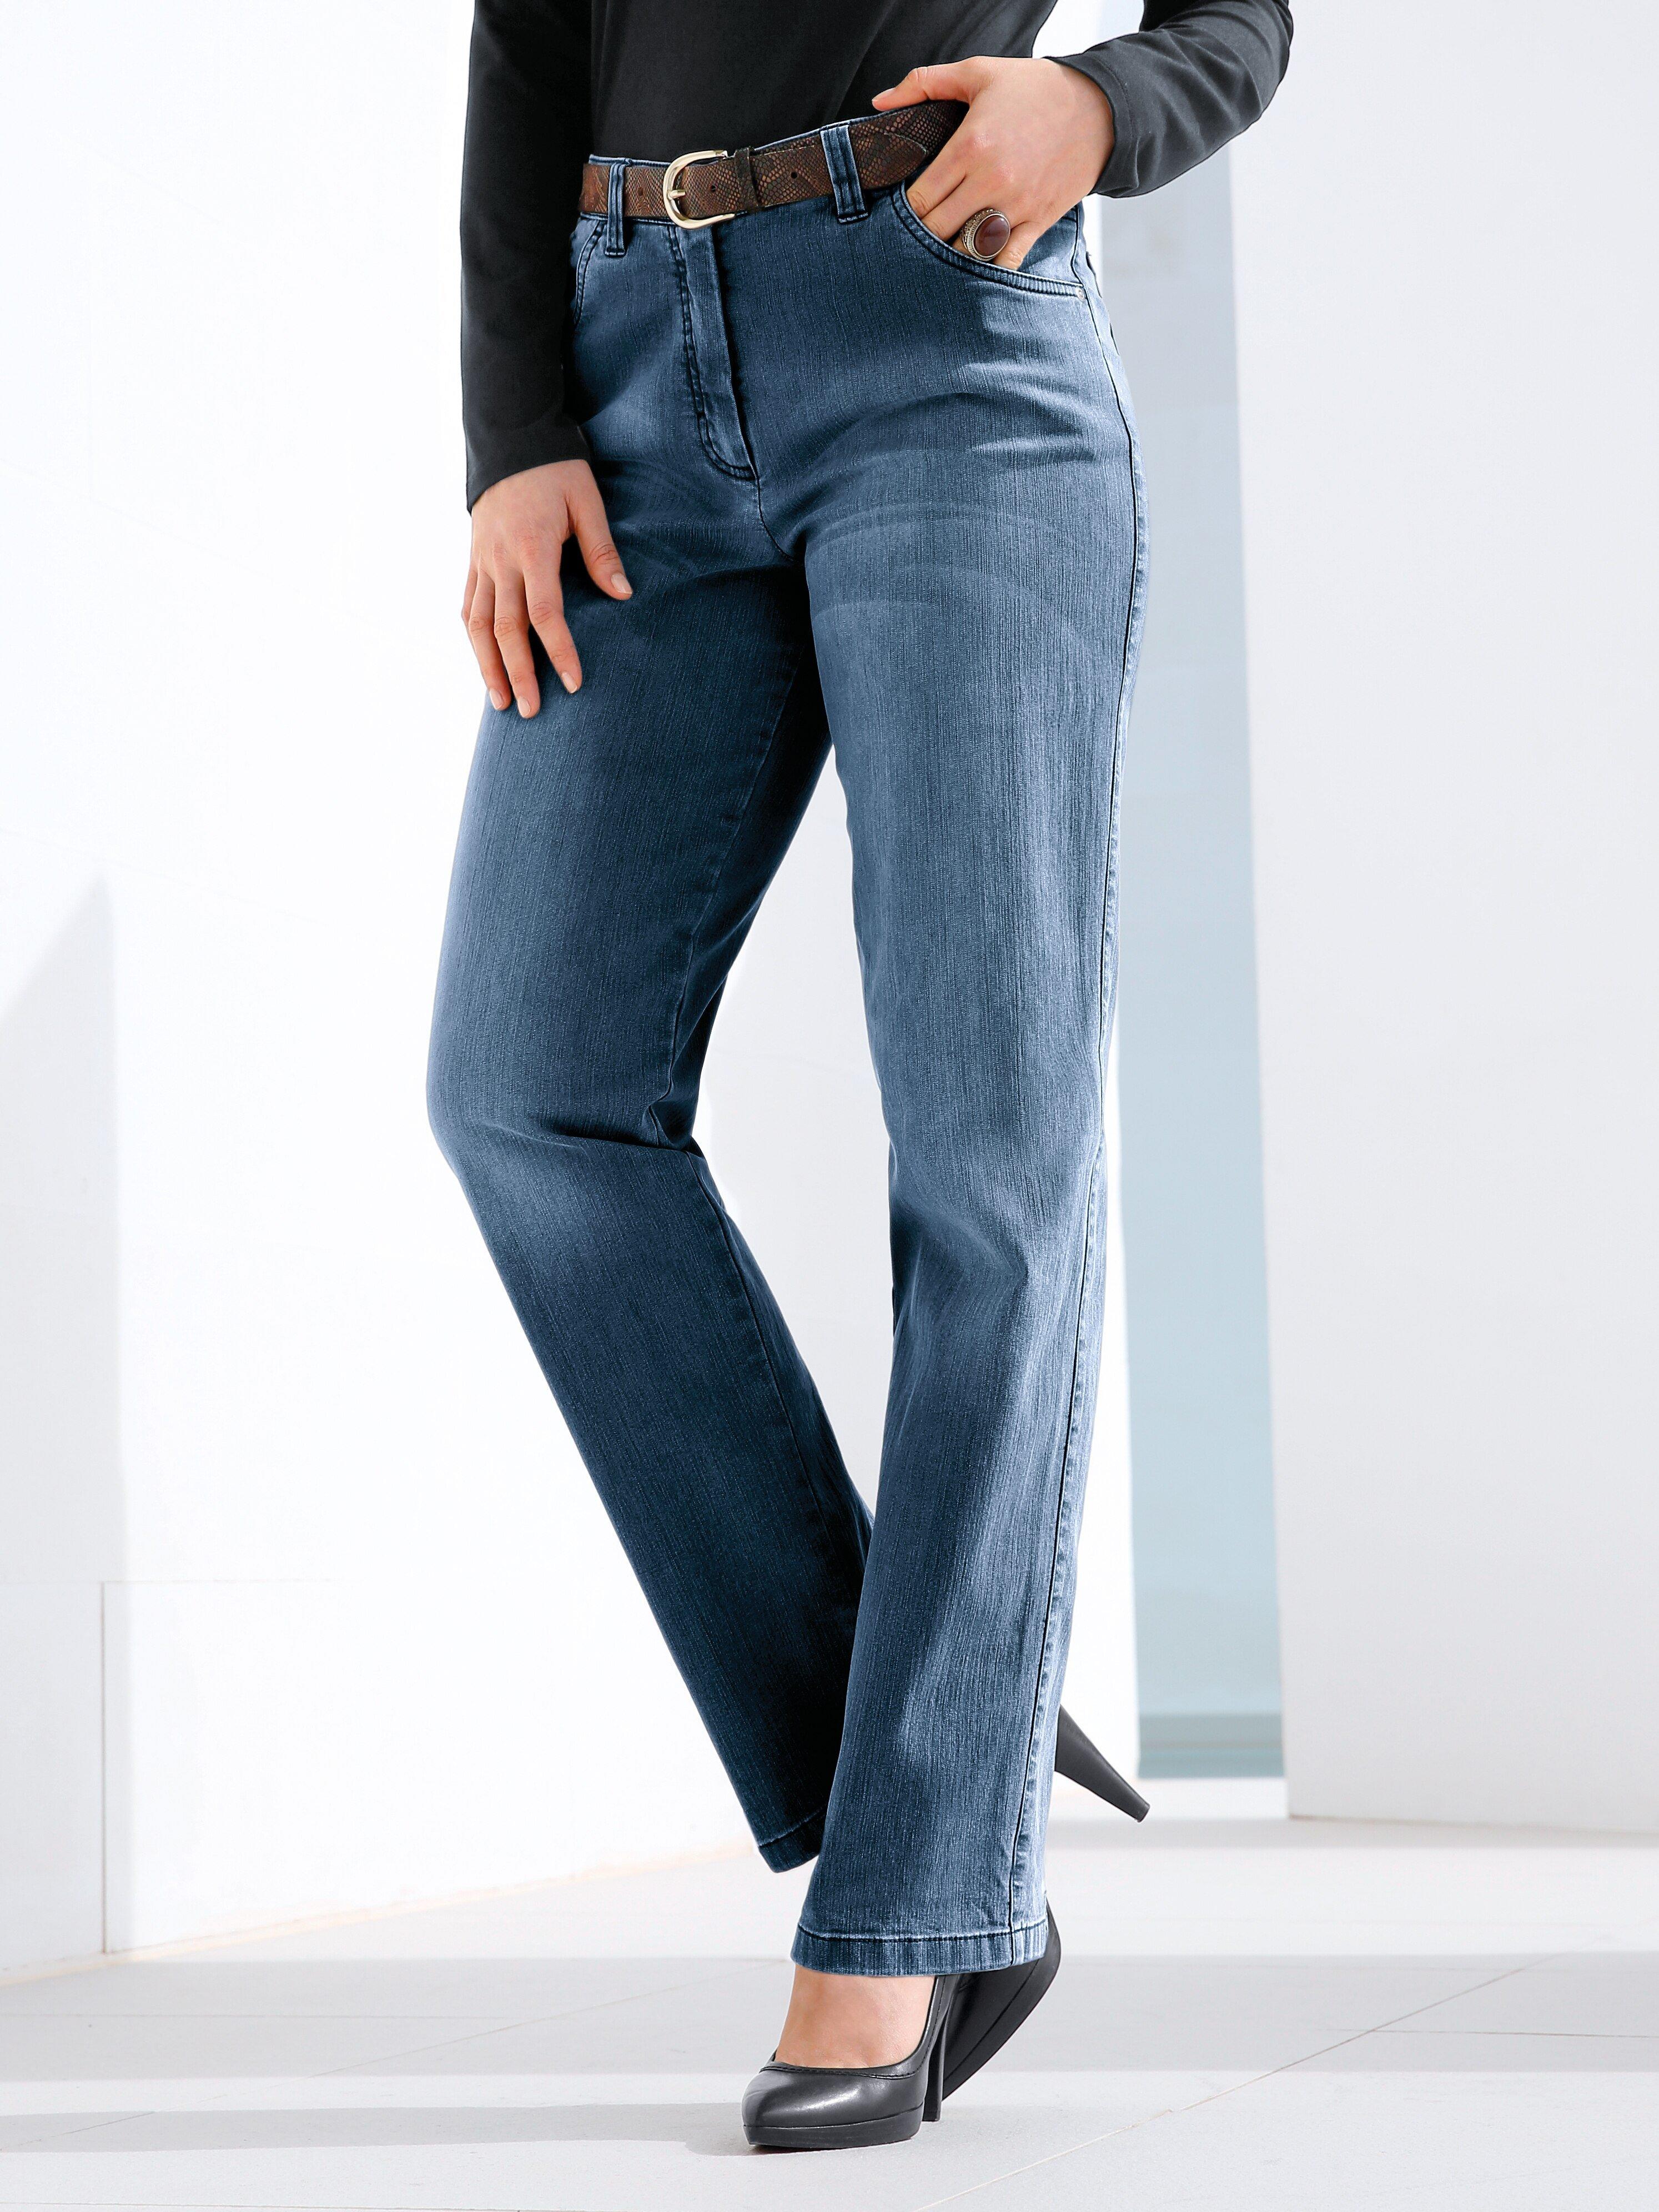 KjBrand - Le jean coupe 5 poches